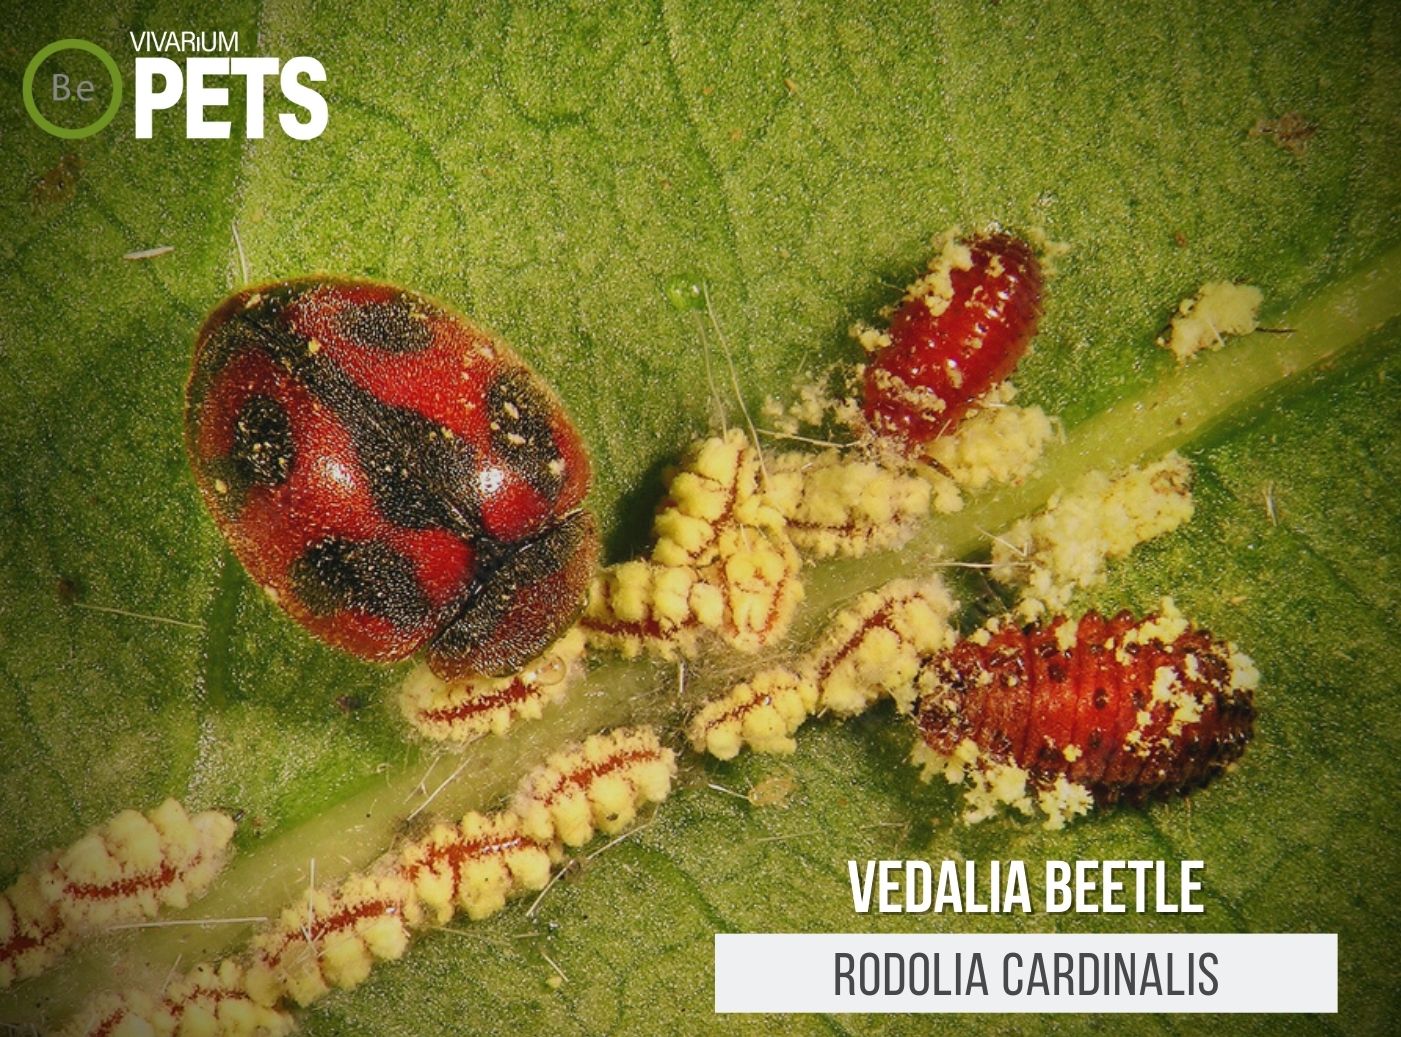 Rodolia cardinalis: A Complete Vedalia Beetle Care Guide!